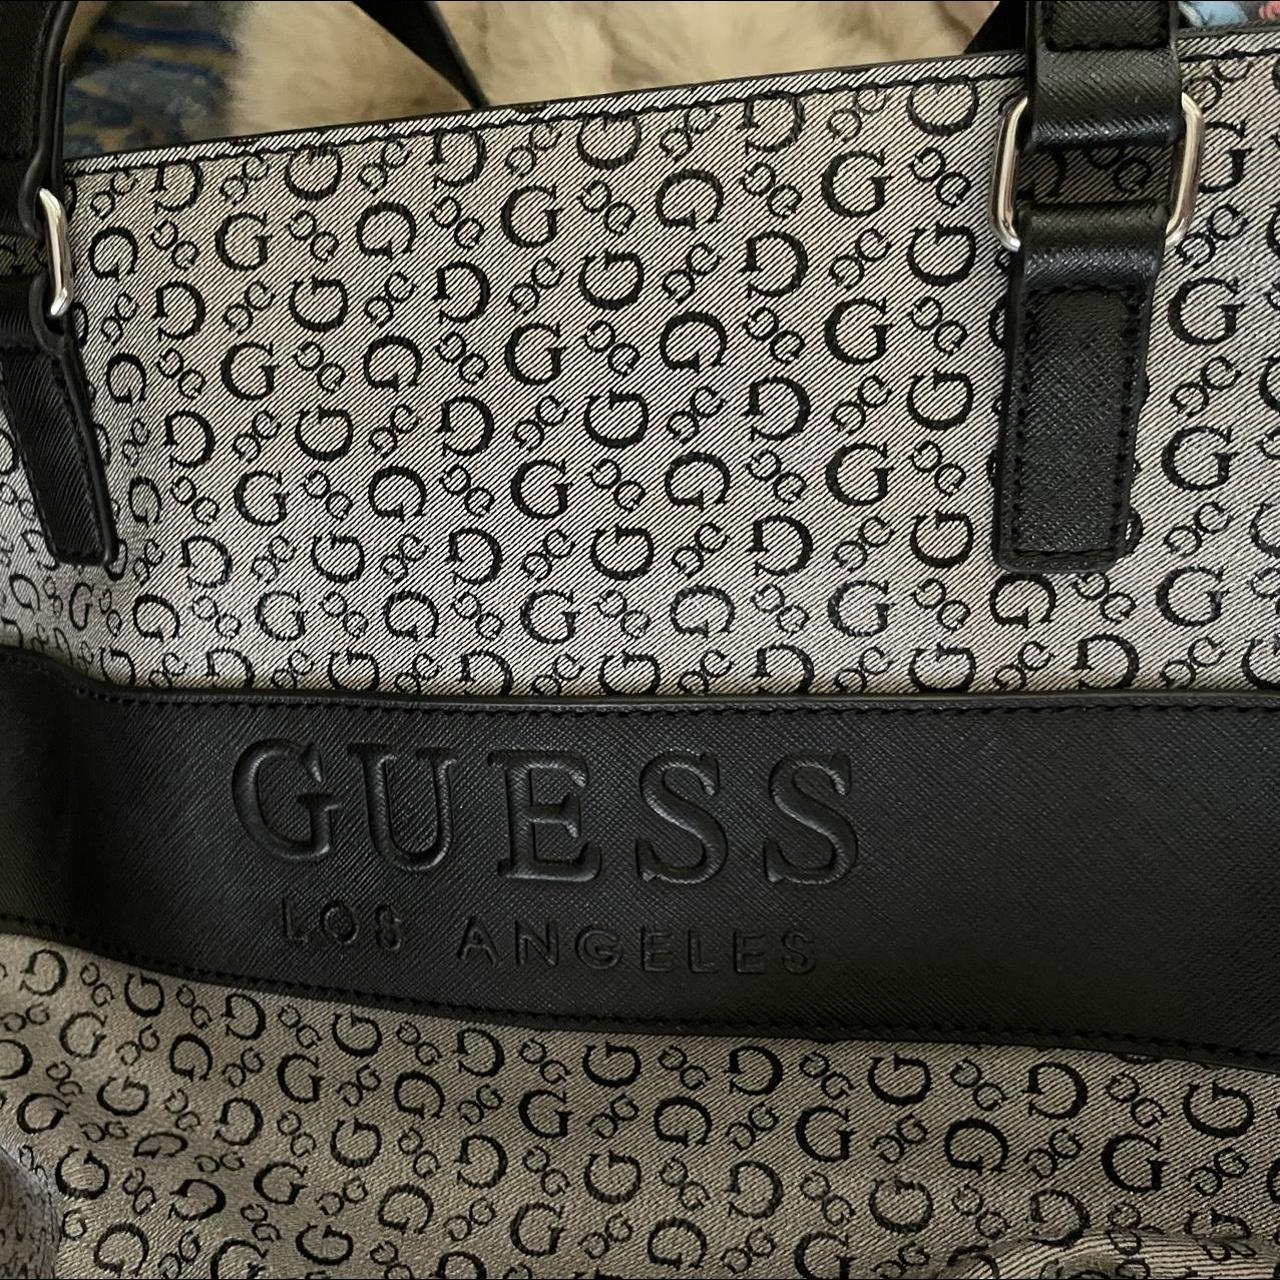 Guess Monique Tote Bag in Gray